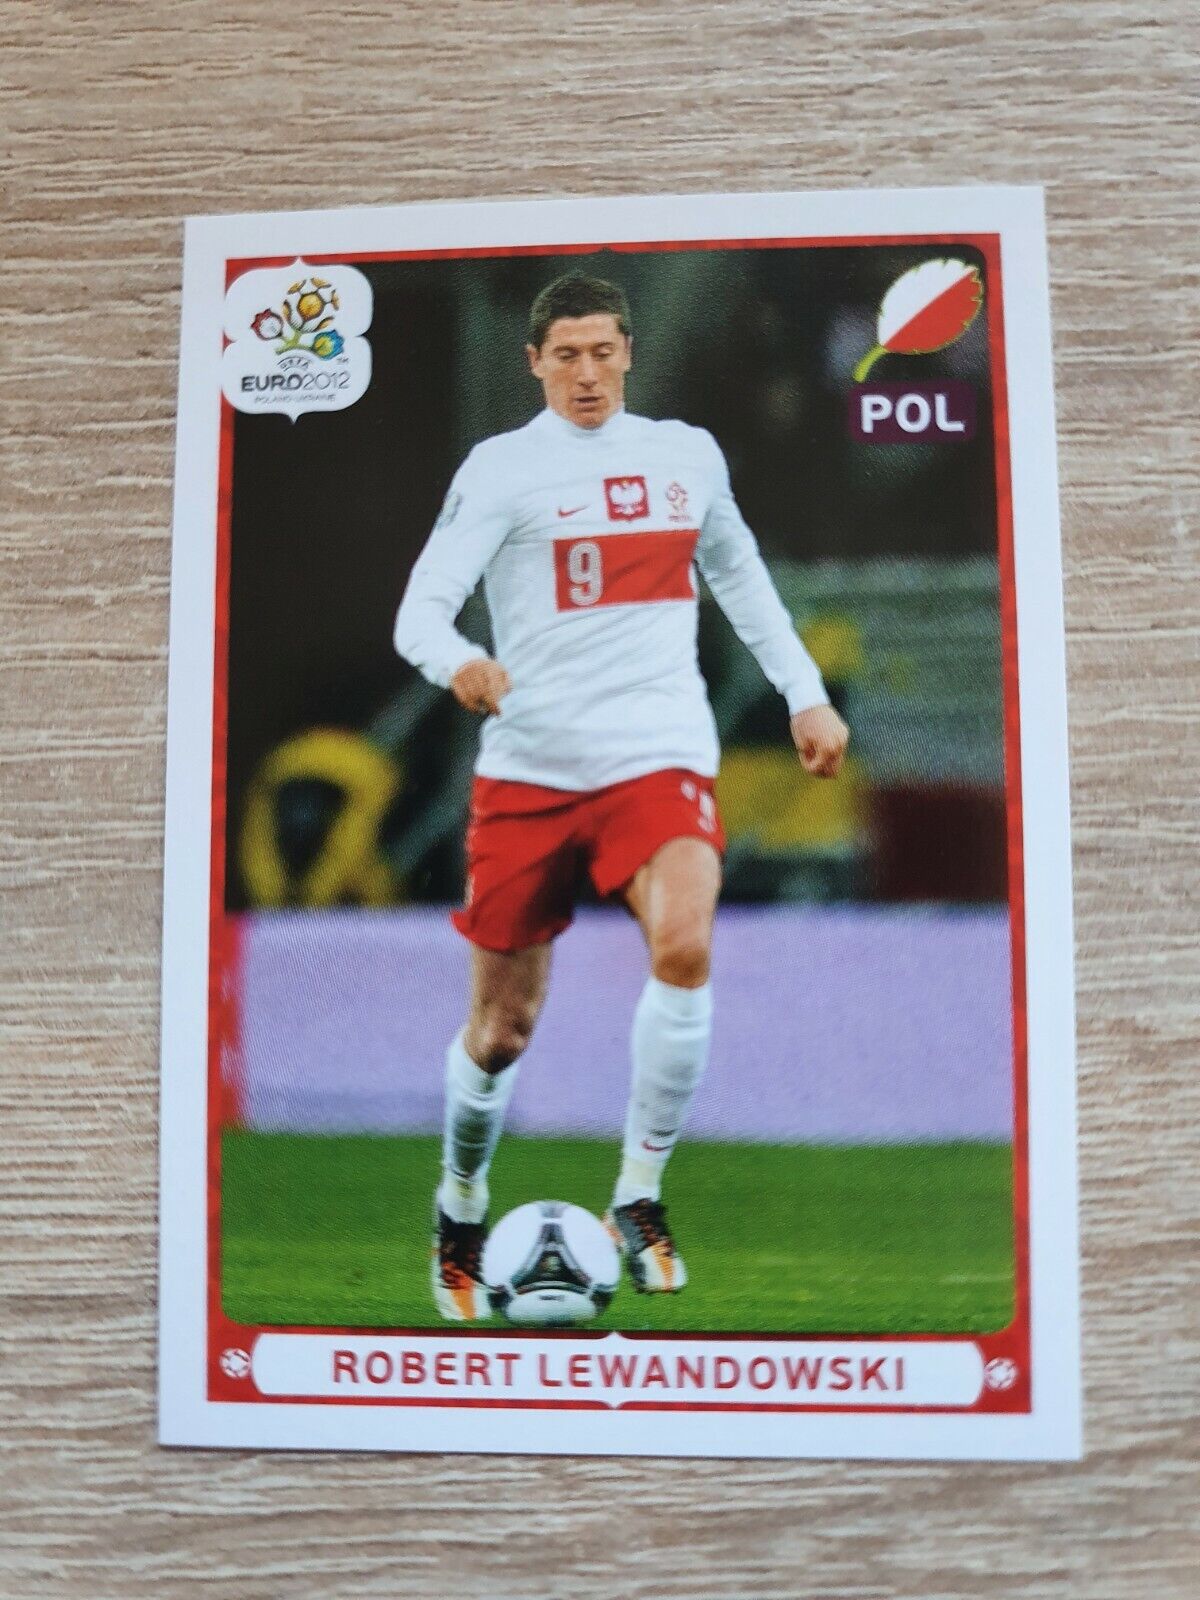 2012 Panini European Championship Robert Lewandowski 77 Poland UEFA Euro 12 Rookie